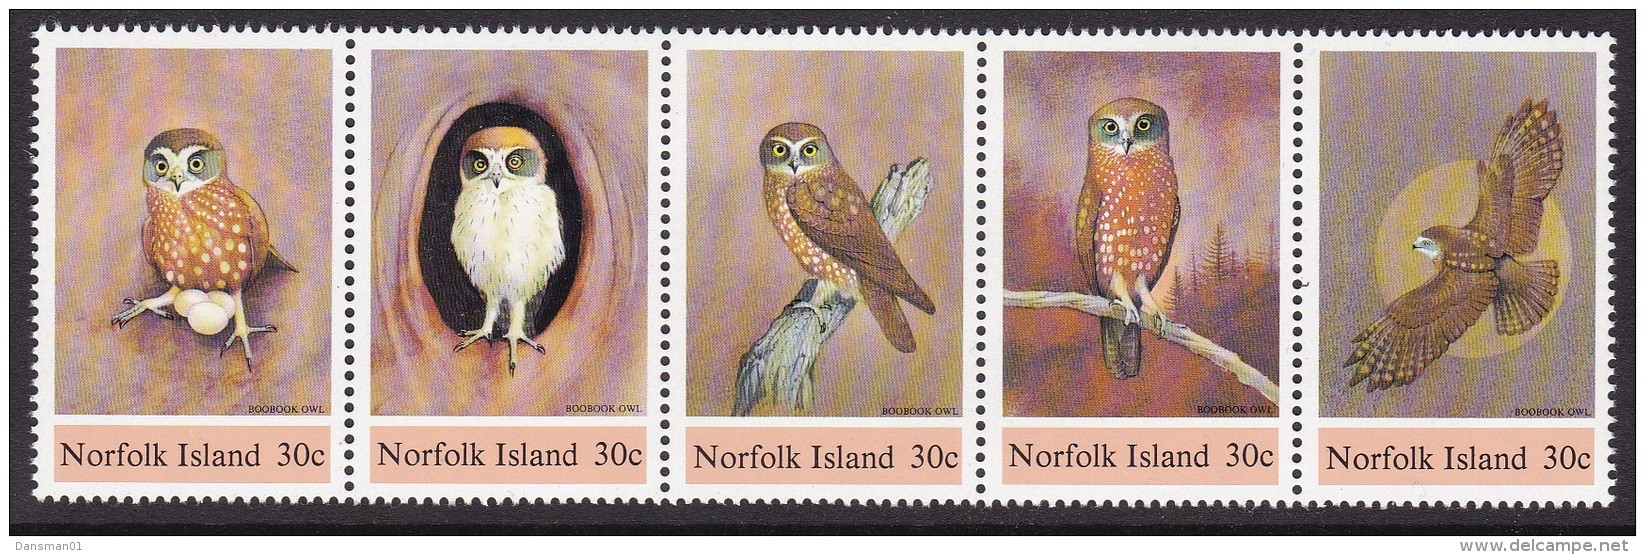 Norfolk Island 1984 Babook Owl Sc 343 Mint Never Hinged - Norfolk Island